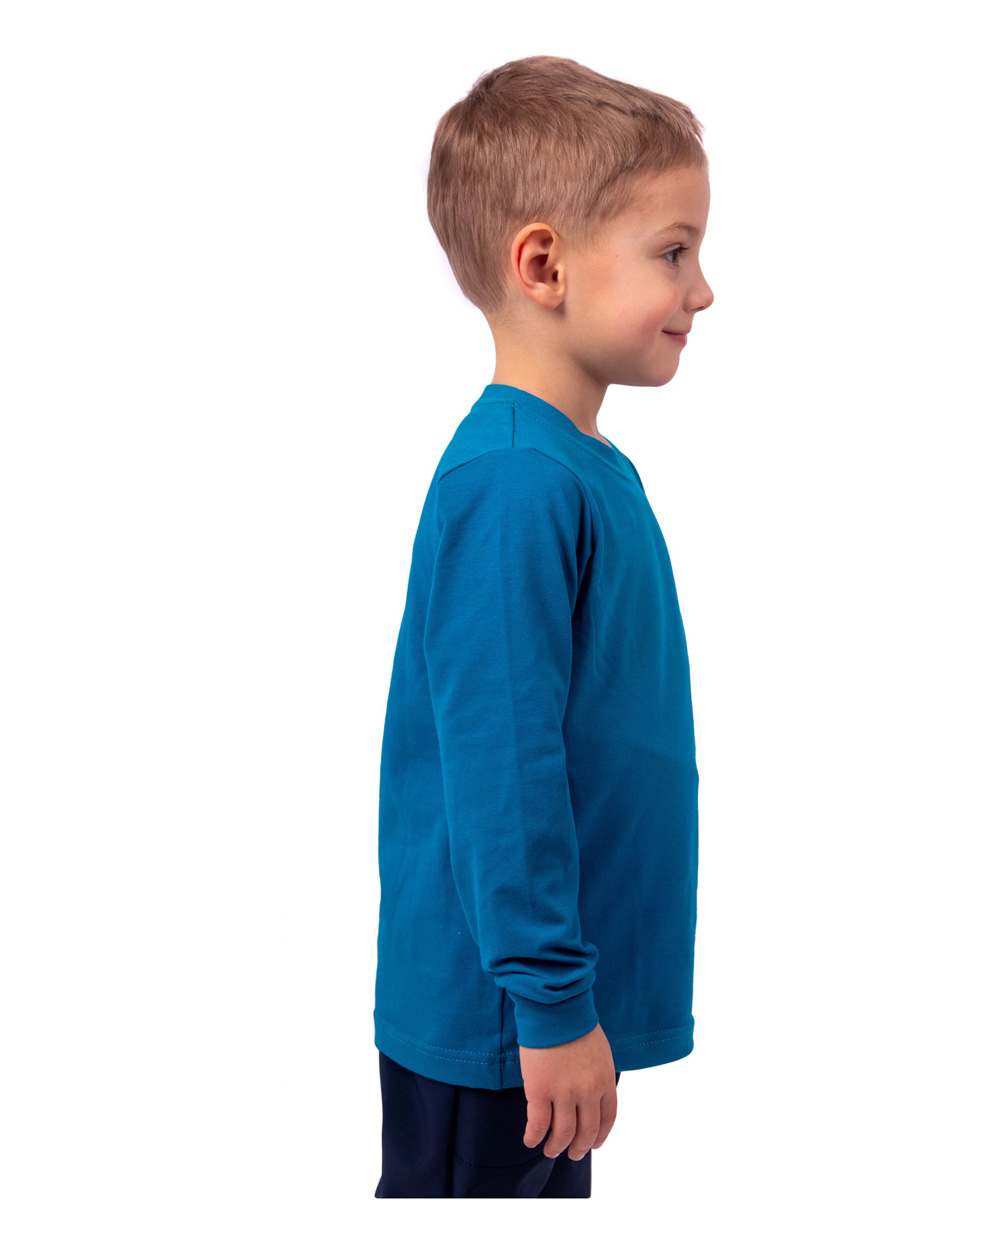 Children's T-shirt, long sleeve, dark turquoise